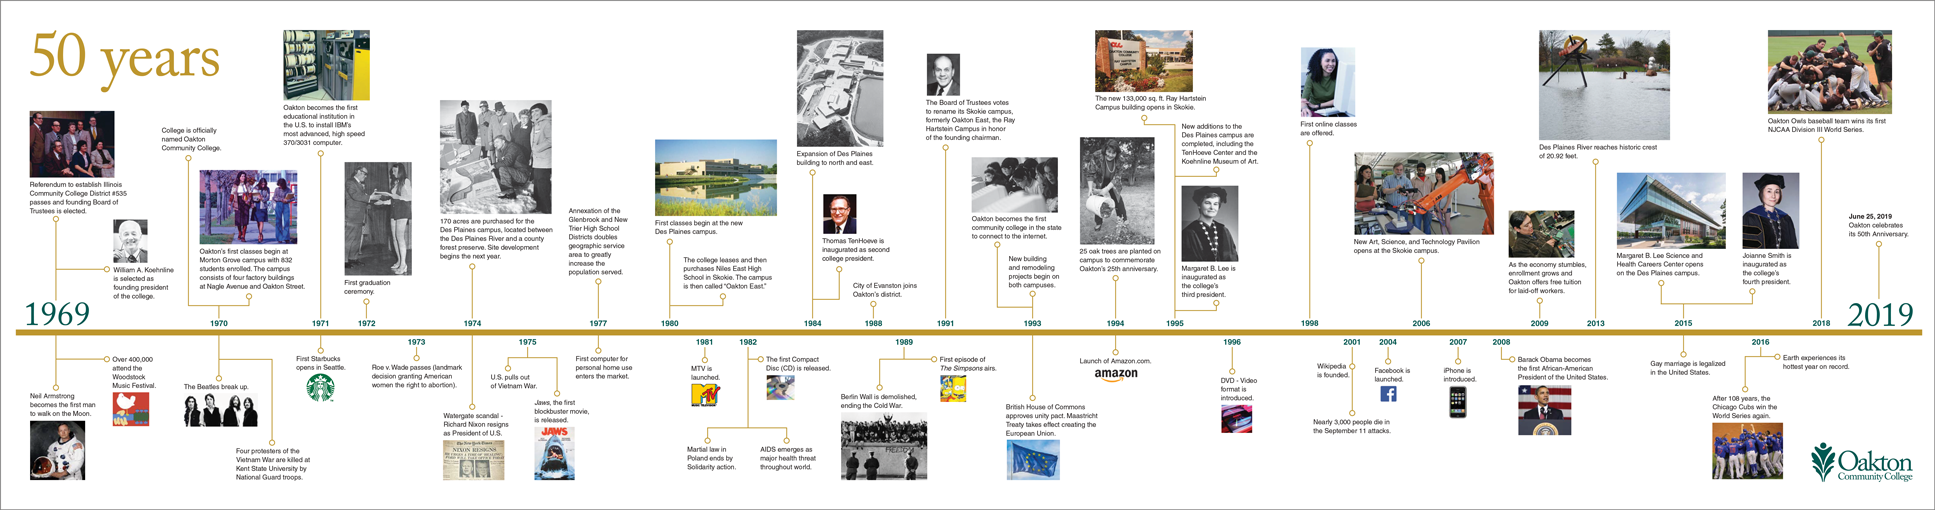 50th Anniversary Timeline image